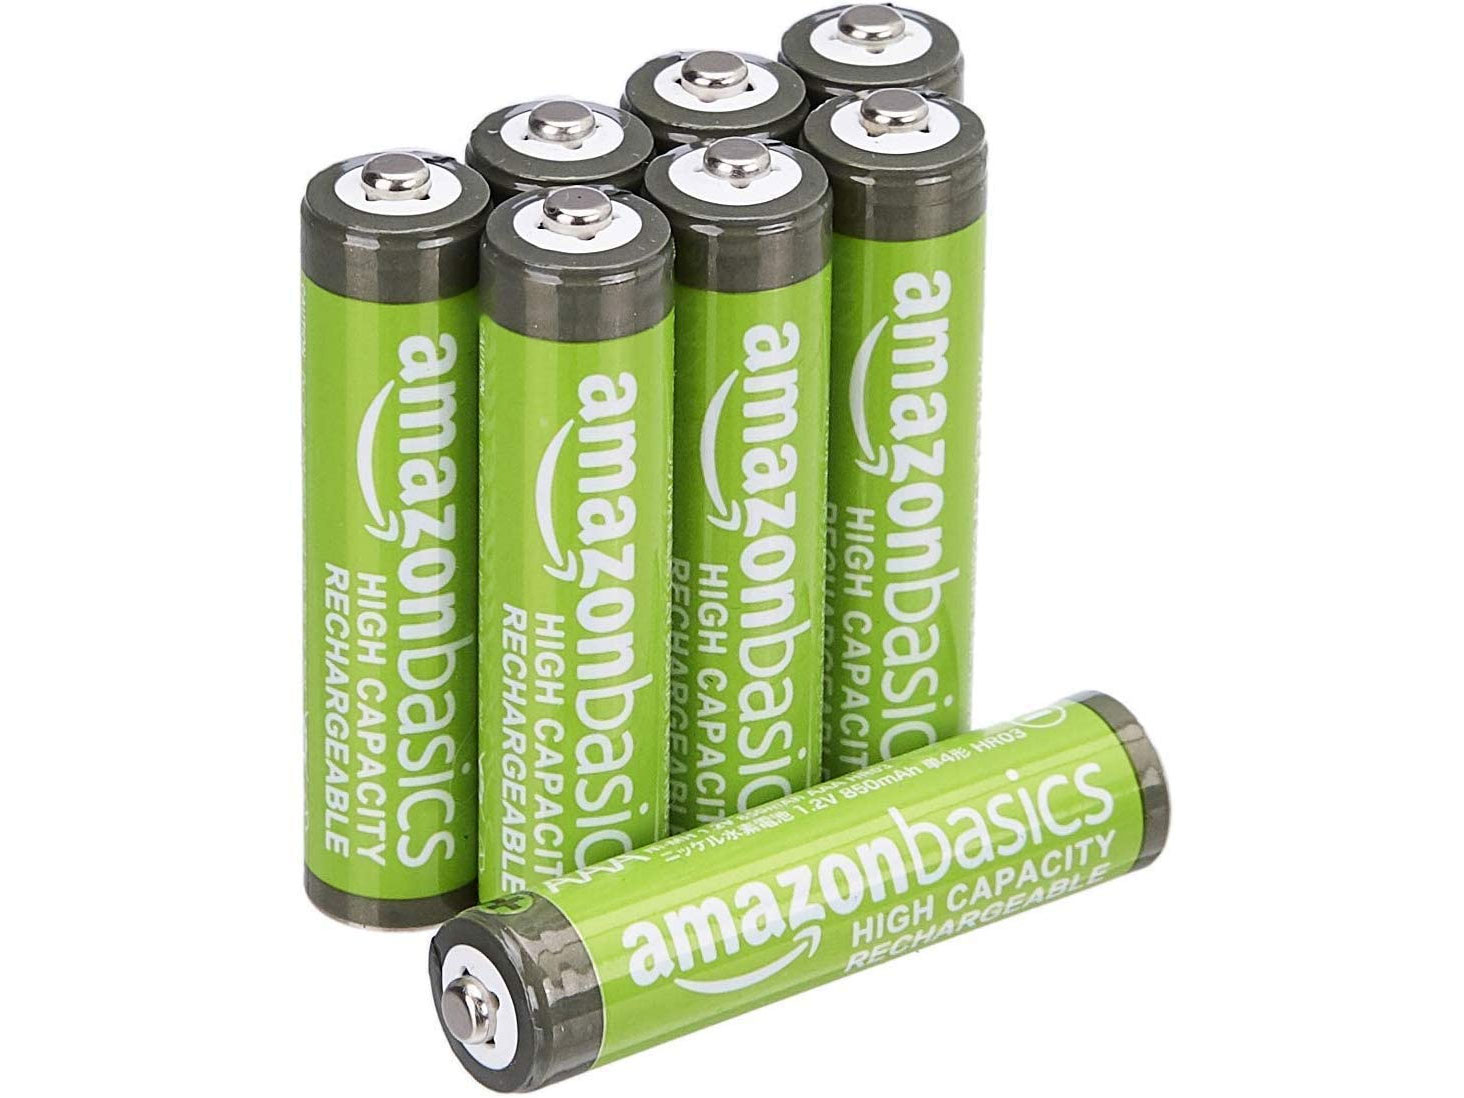 Amazon Basics AAA Rechargeable Batteries (8 Pack)只卖$8.06